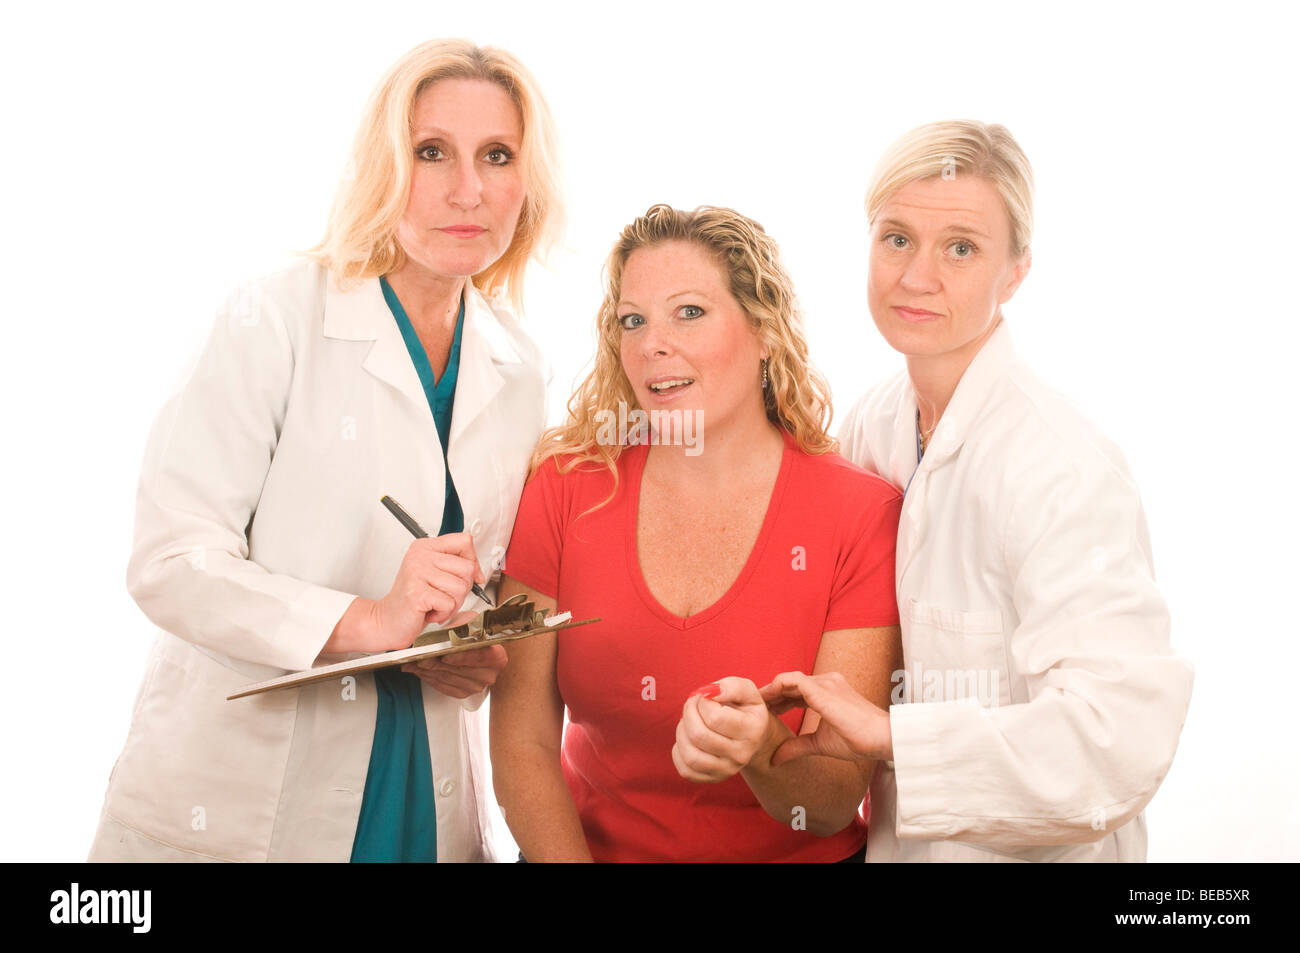 urse nurses three group team lady ladies females teamwork pretty patient hospital office blood pressure test read reading help o Stock Photo